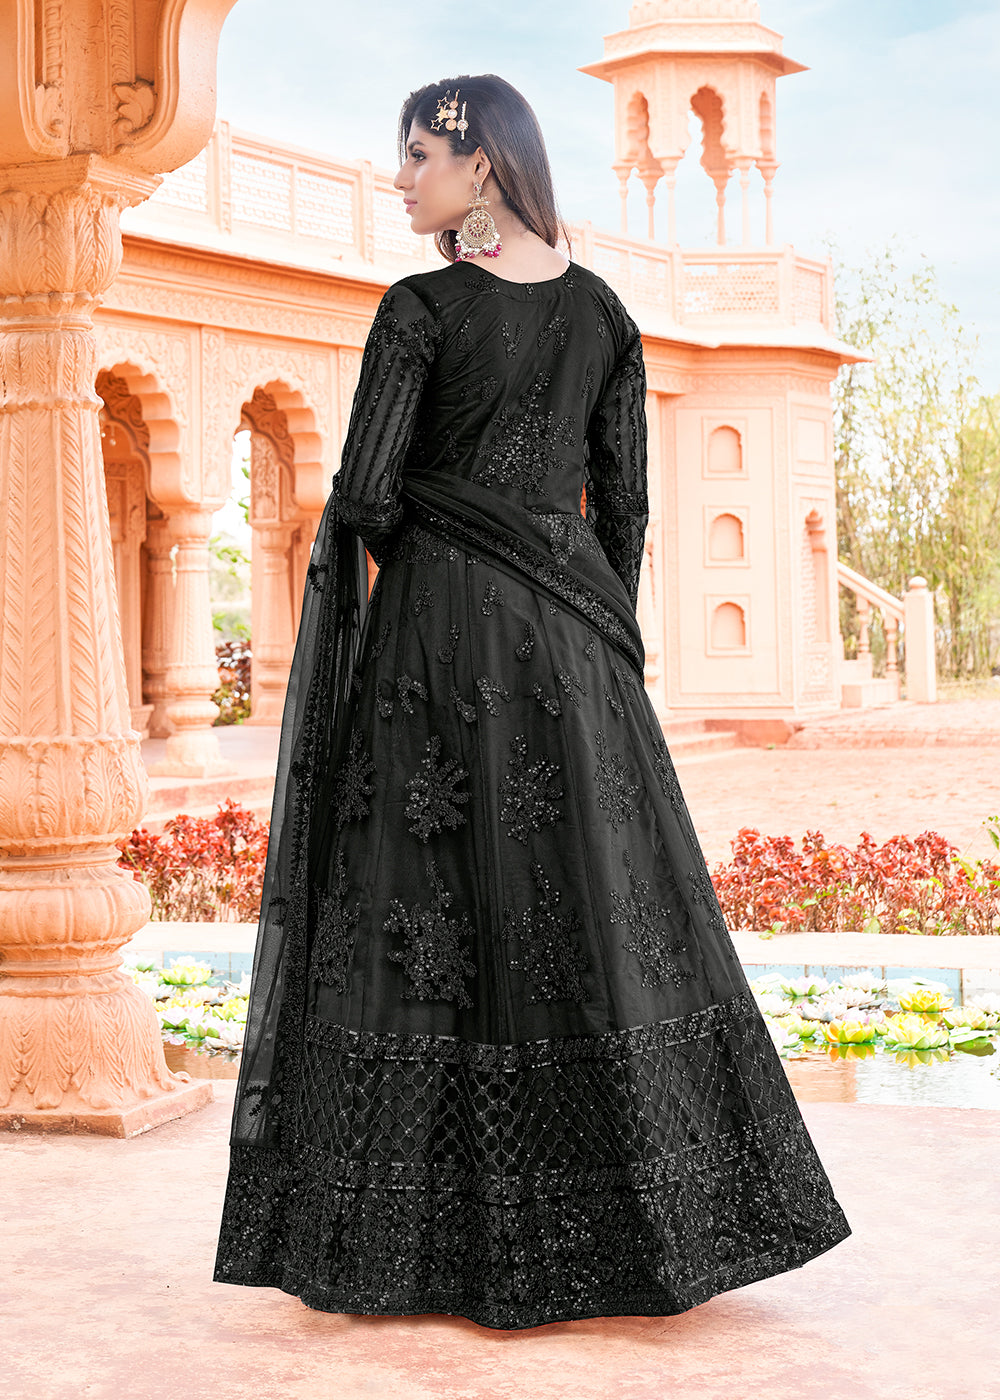 Buy Now Long Length Strange Black Embroidered Net Anarkali Suit Online in USA, UK, Australia, New Zealand, Canada, Italy & Worldwide at Empress Clothing. 